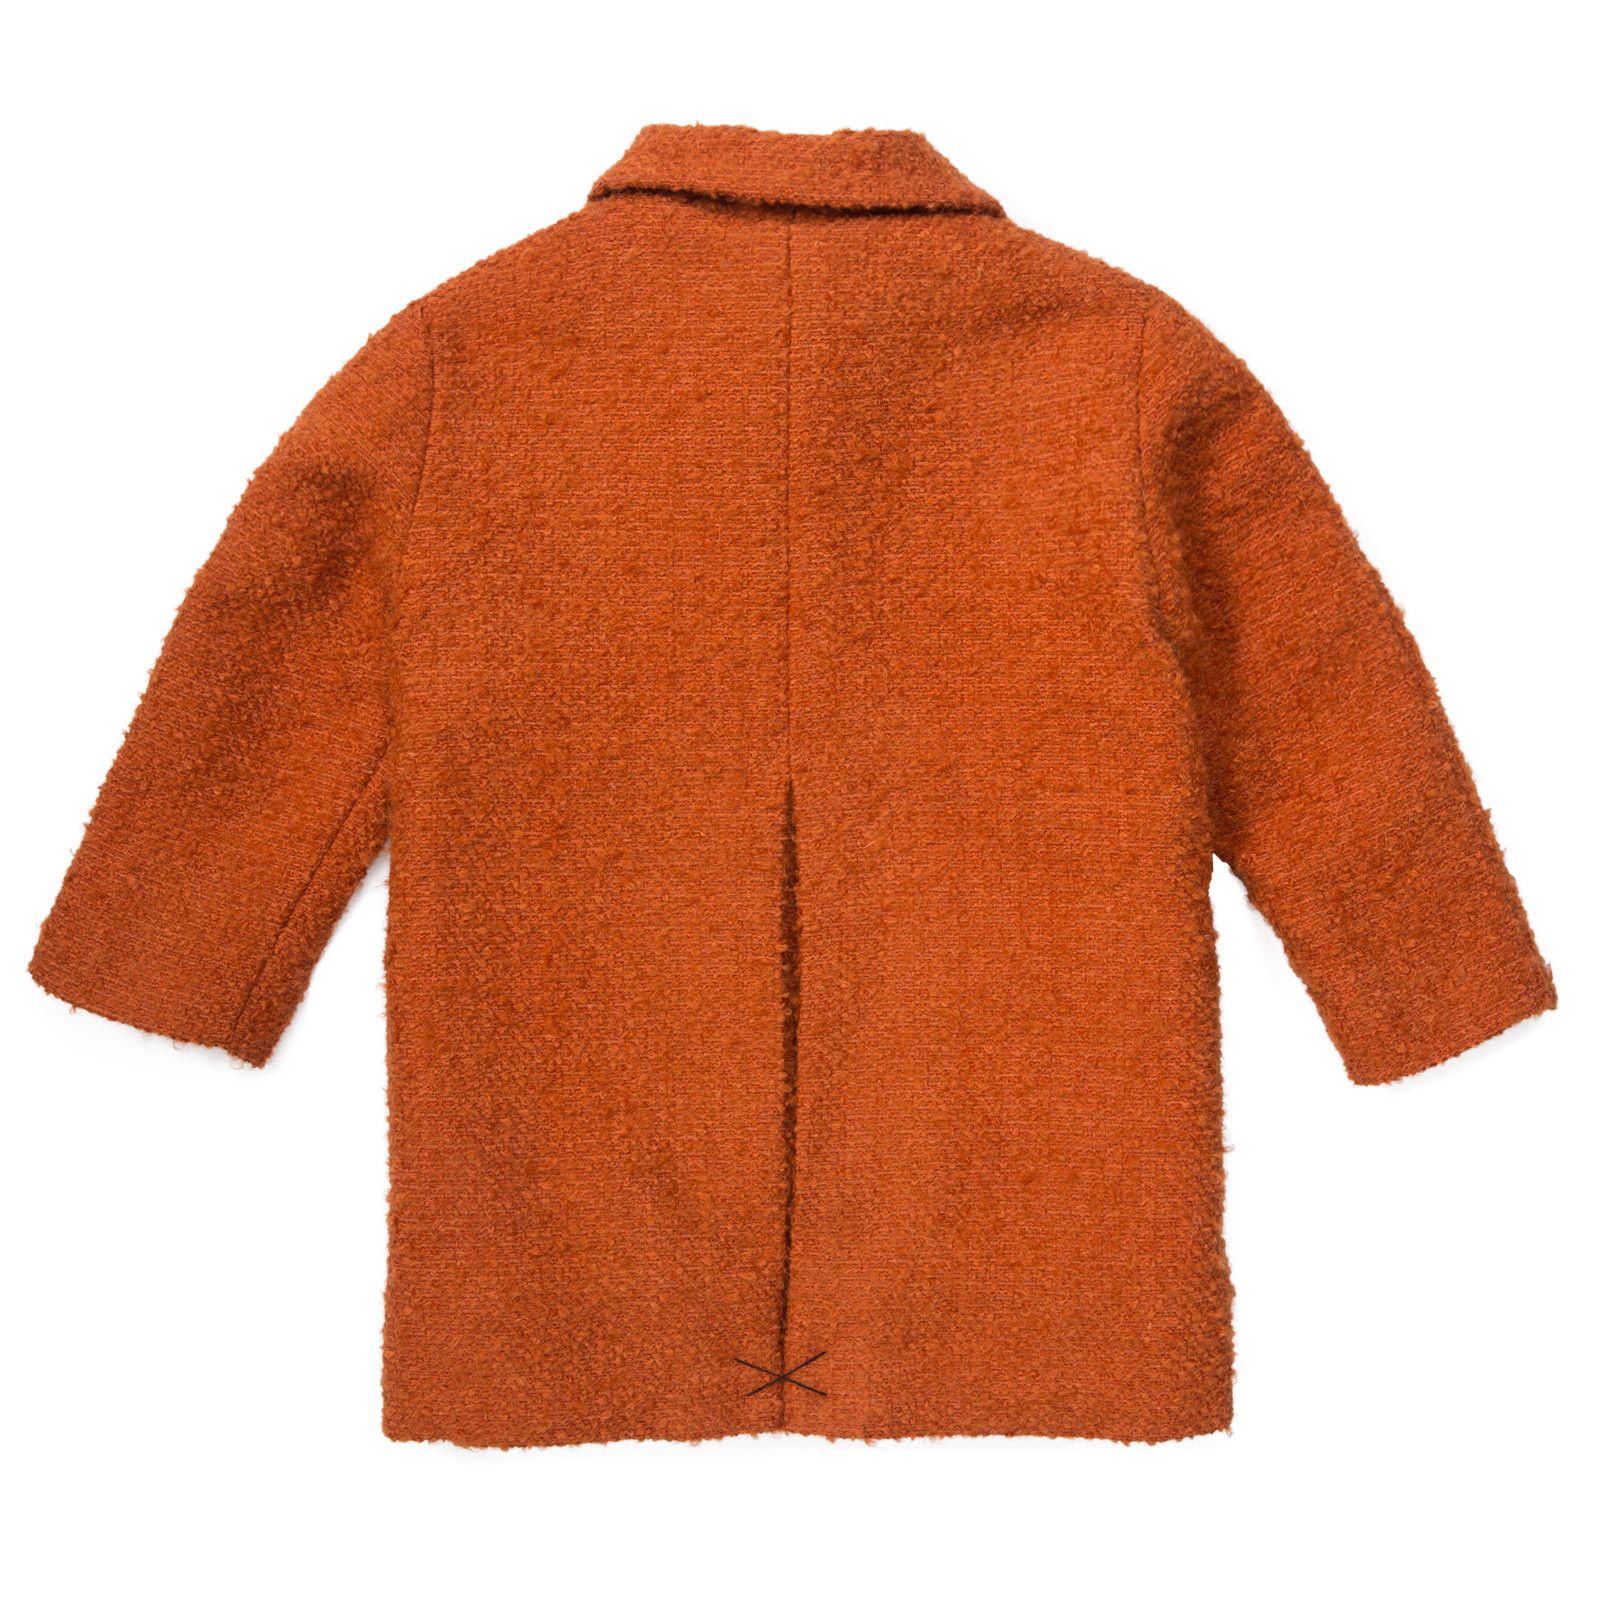 Girls Burnt Orange Wool Coat With Flap Pockets - CÉMAROSE | Children's Fashion Store - 2